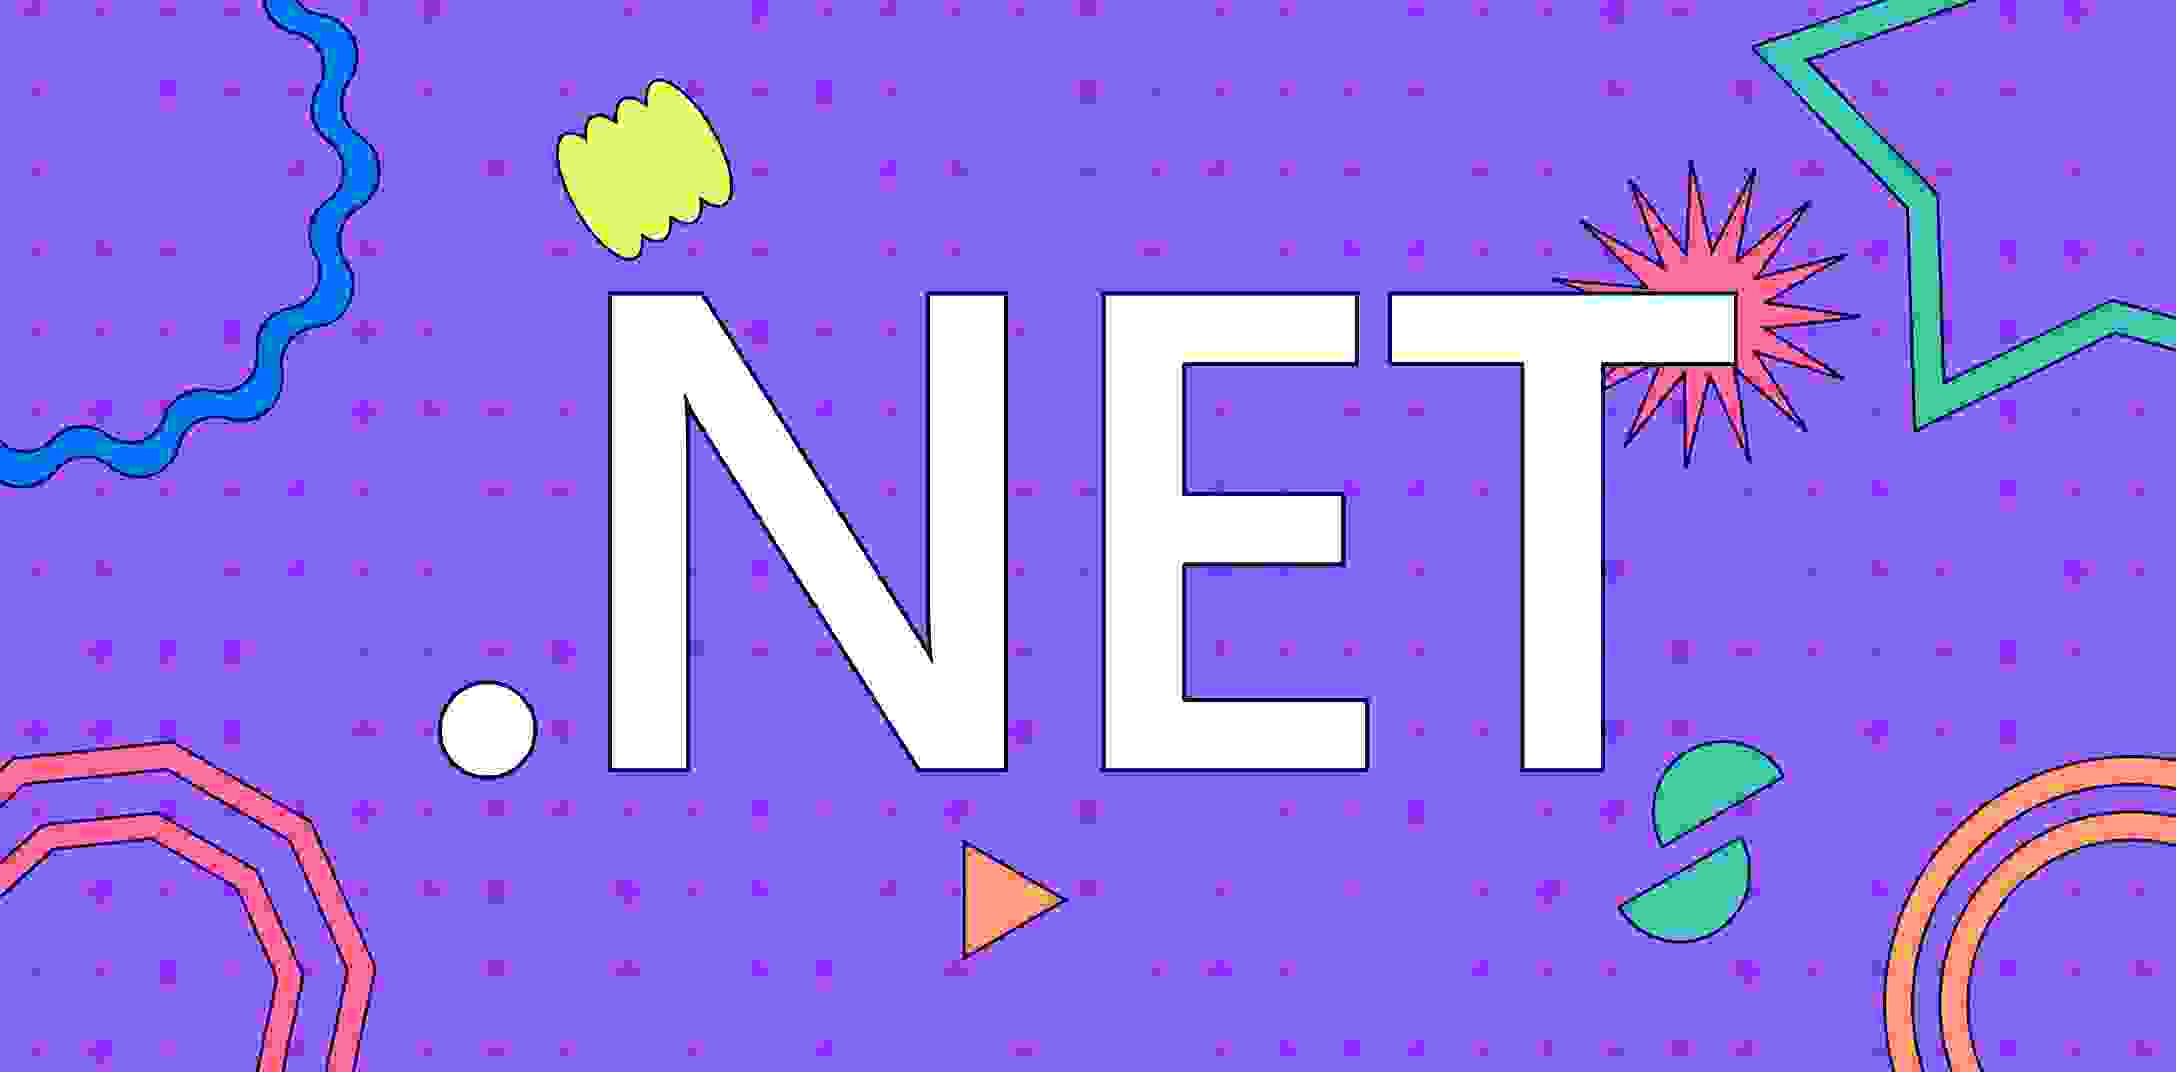 NET_logo.png